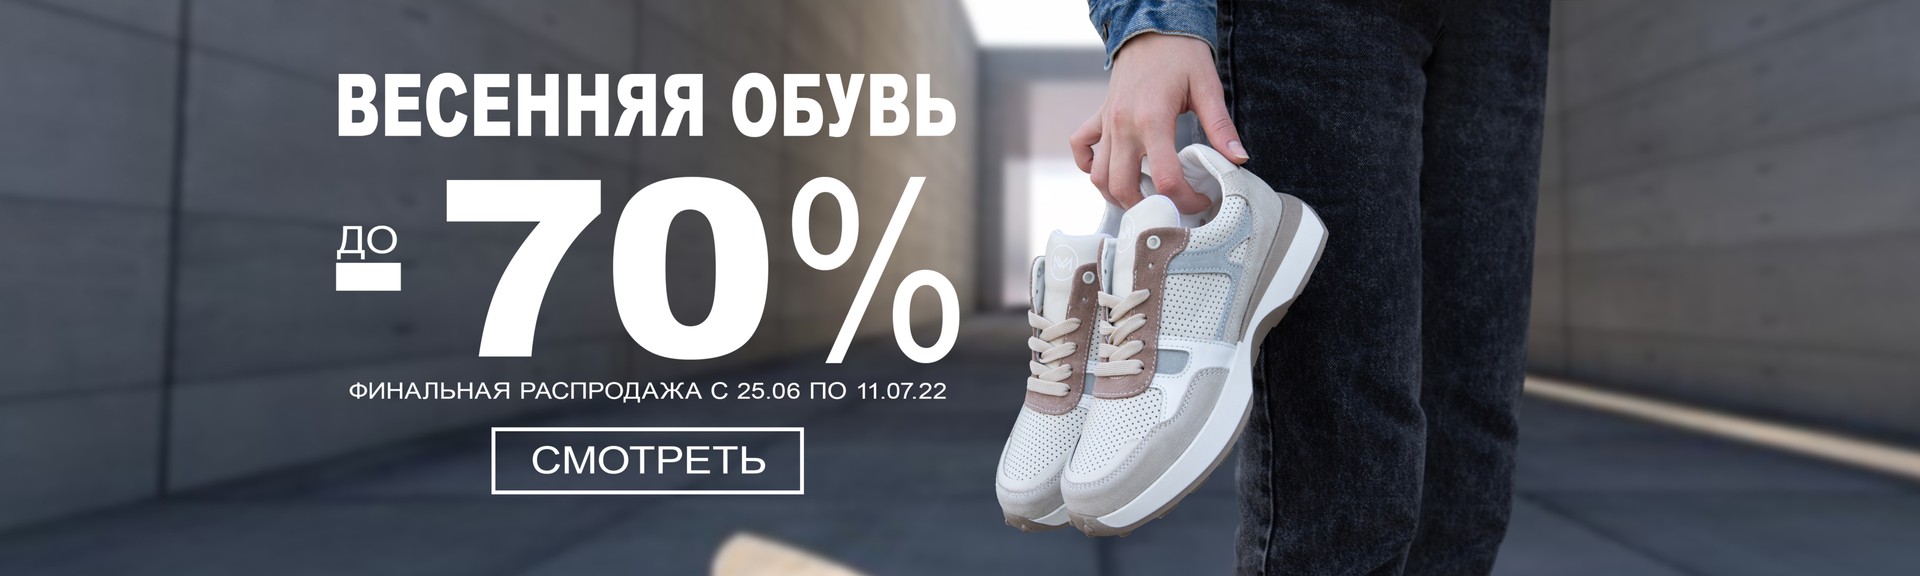 акция на весеннюю обувь -70%